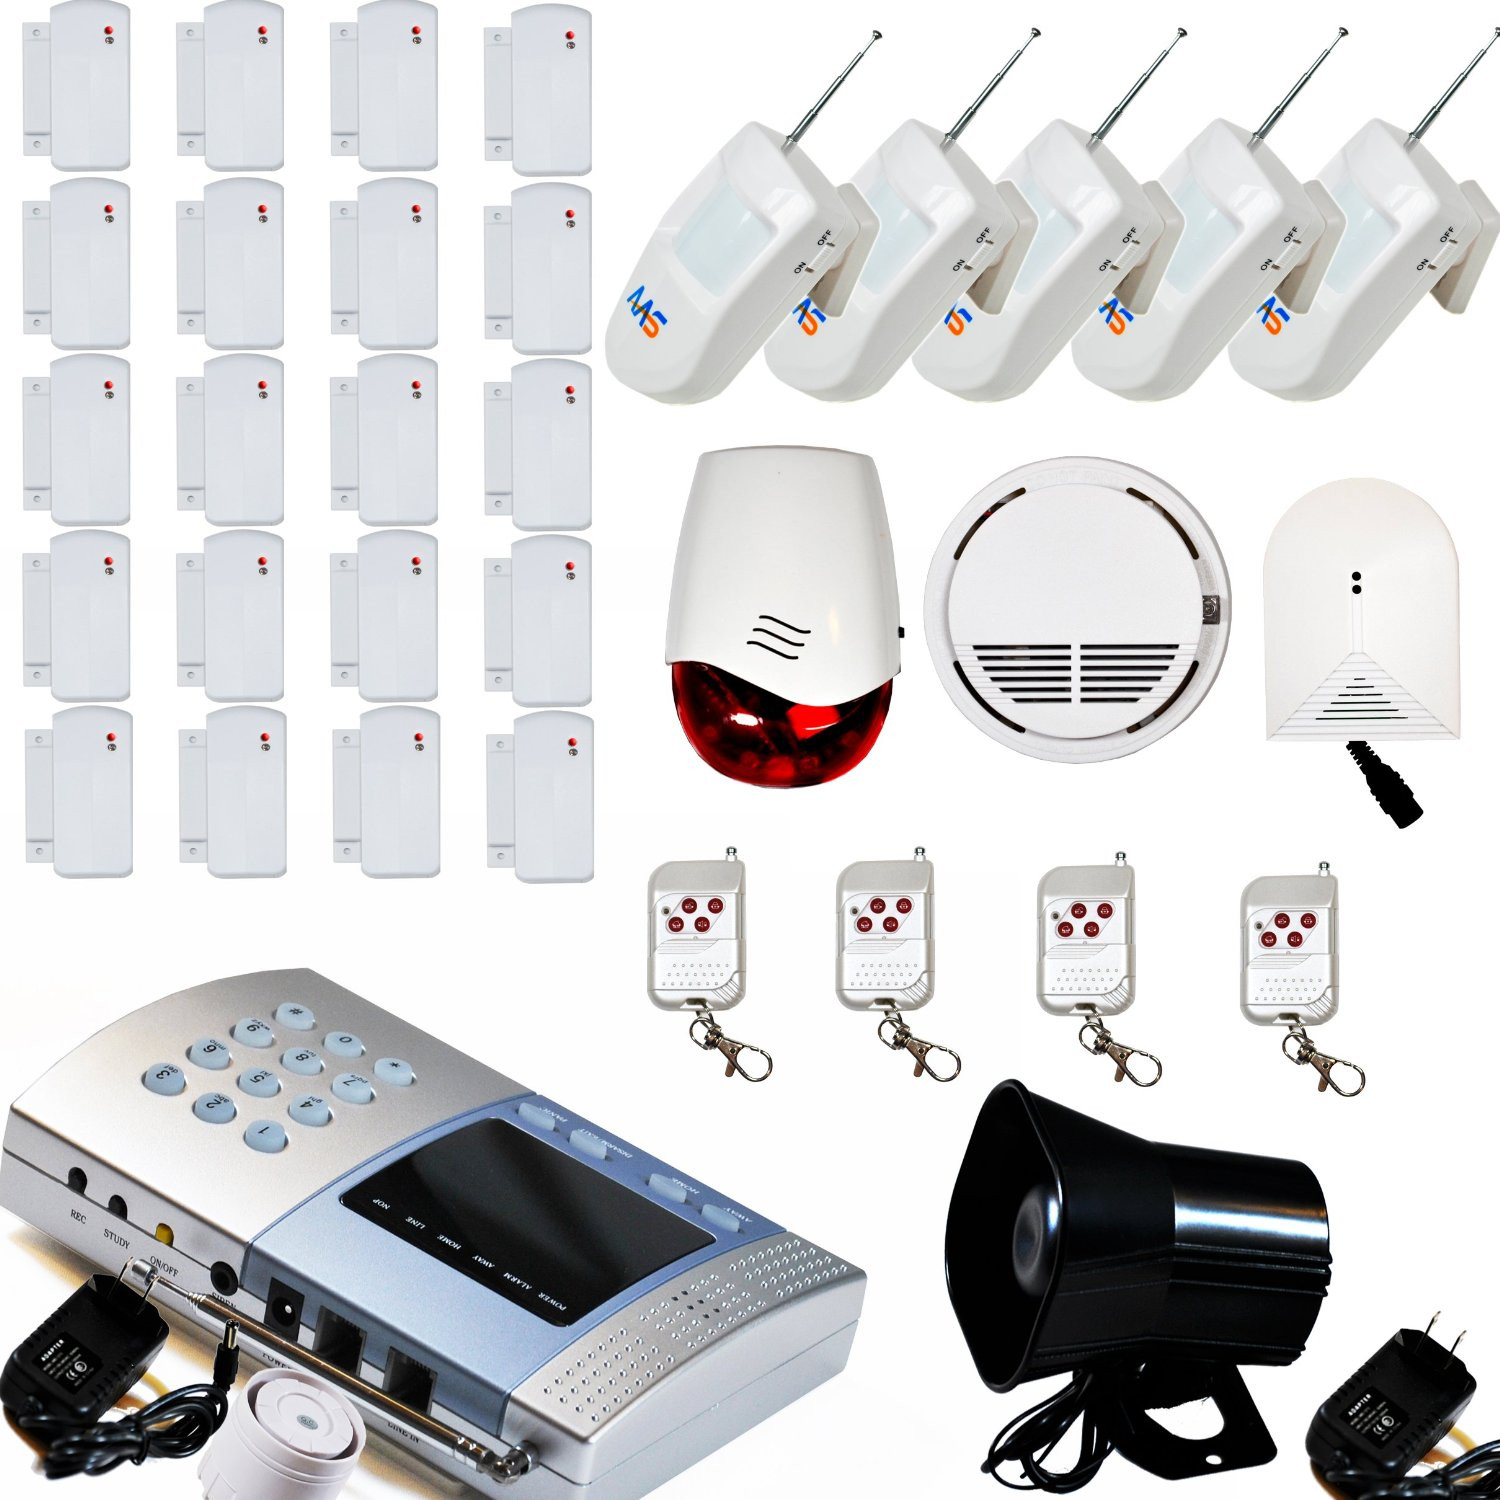 DIY Home Alarm System
 AAS V600 Wireless Home Security Alarm System Kit DIY